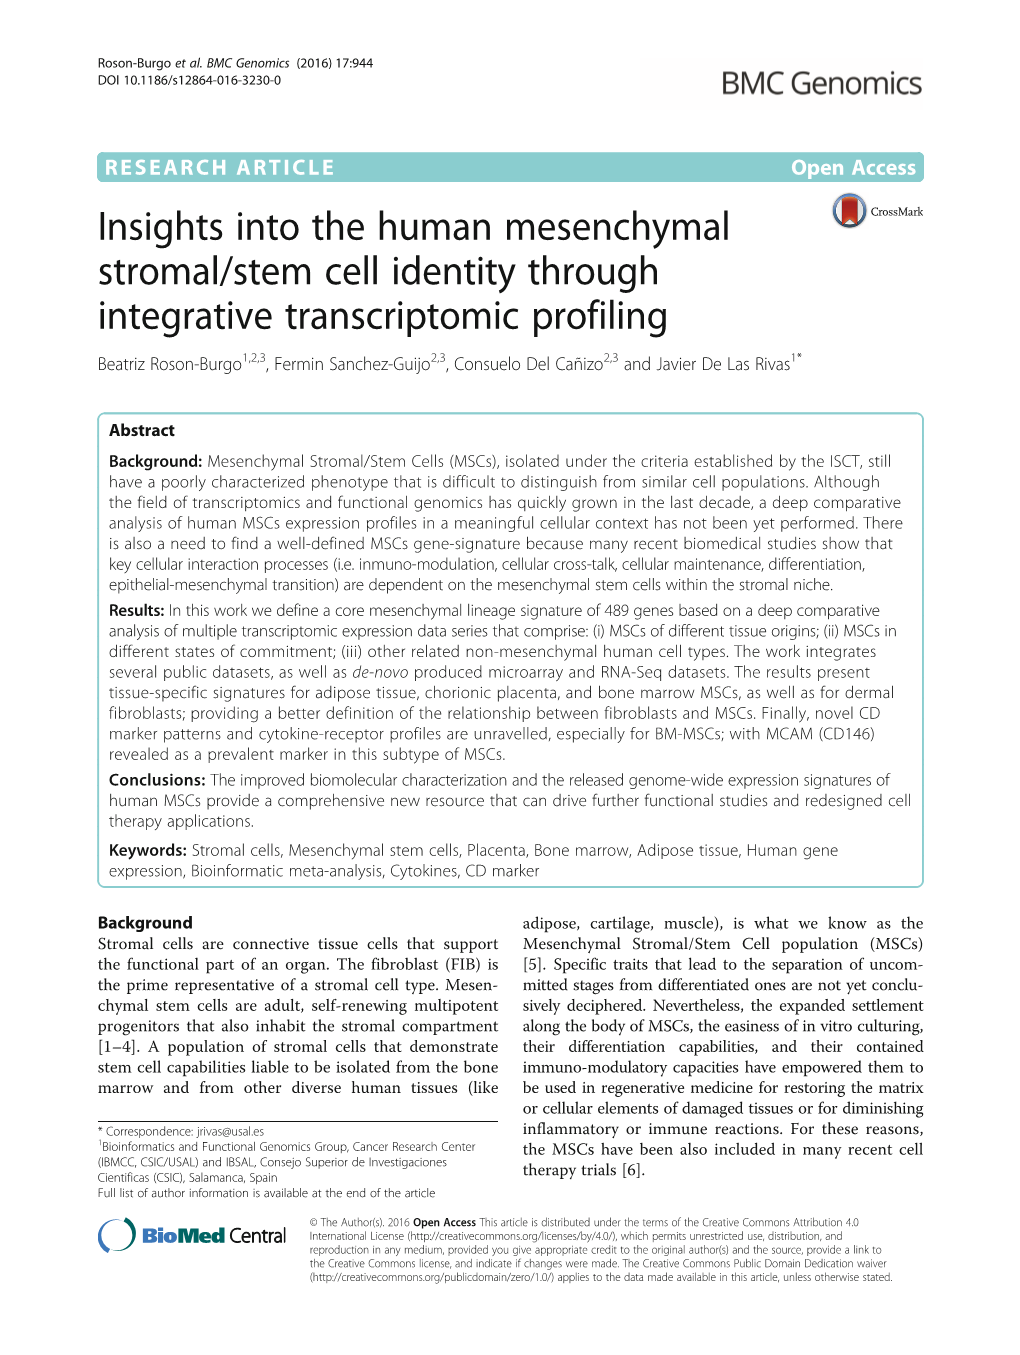 Insights Into the Human Mesenchymal Stromal/Stem Cell Identity Through